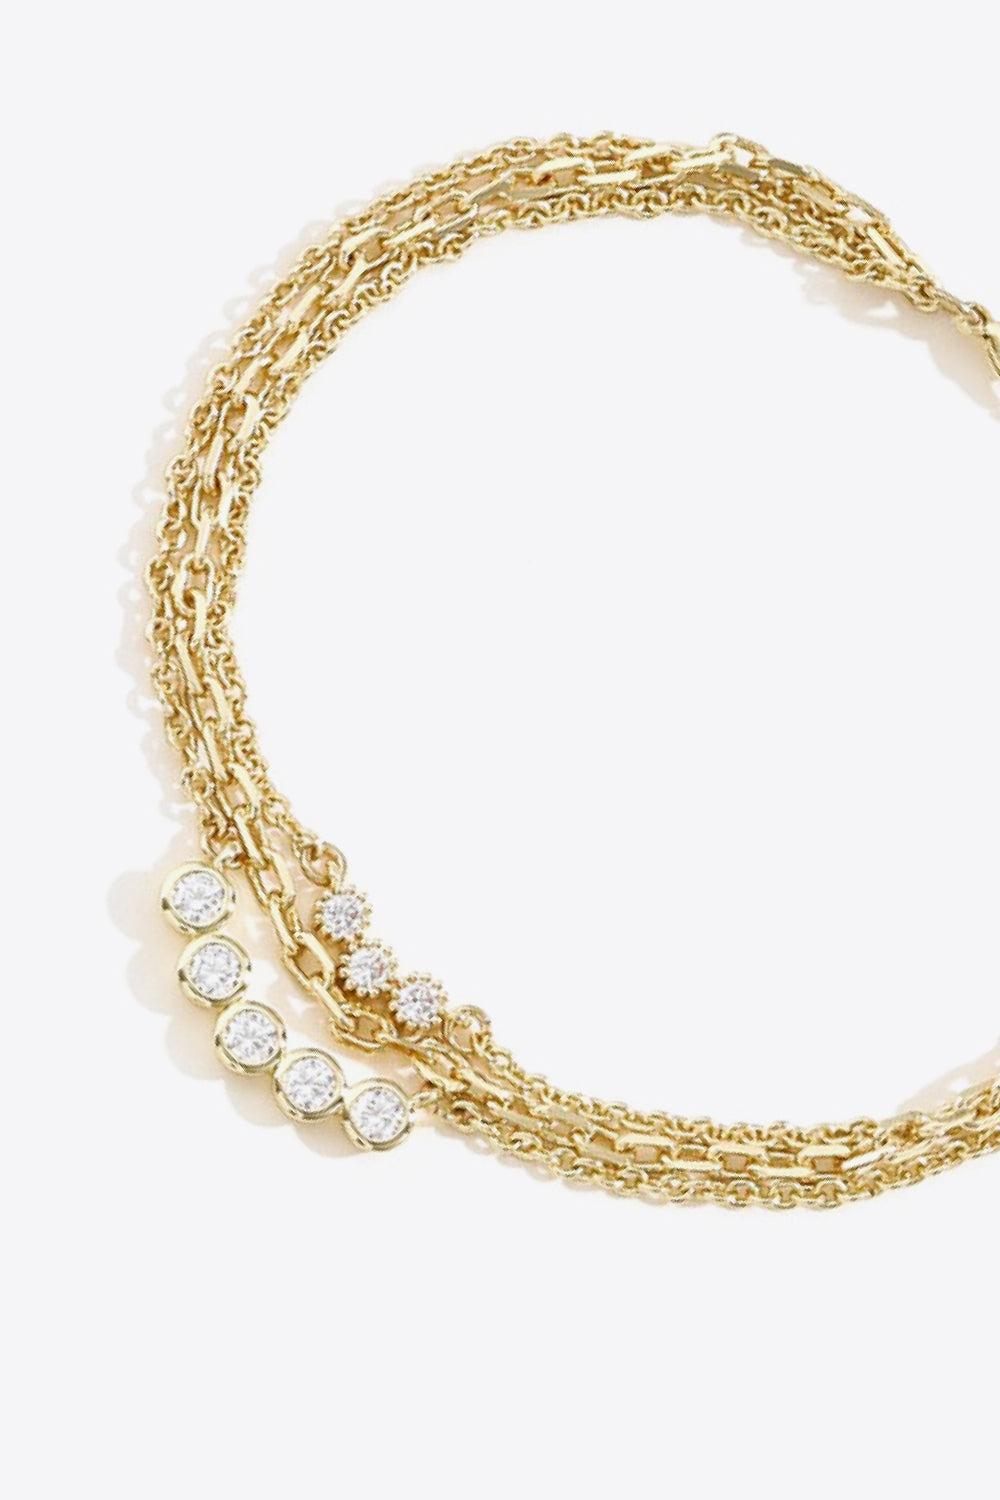 Zircon Layered Bracelet - Women’s Jewelry - Bracelets - 3 - 2024